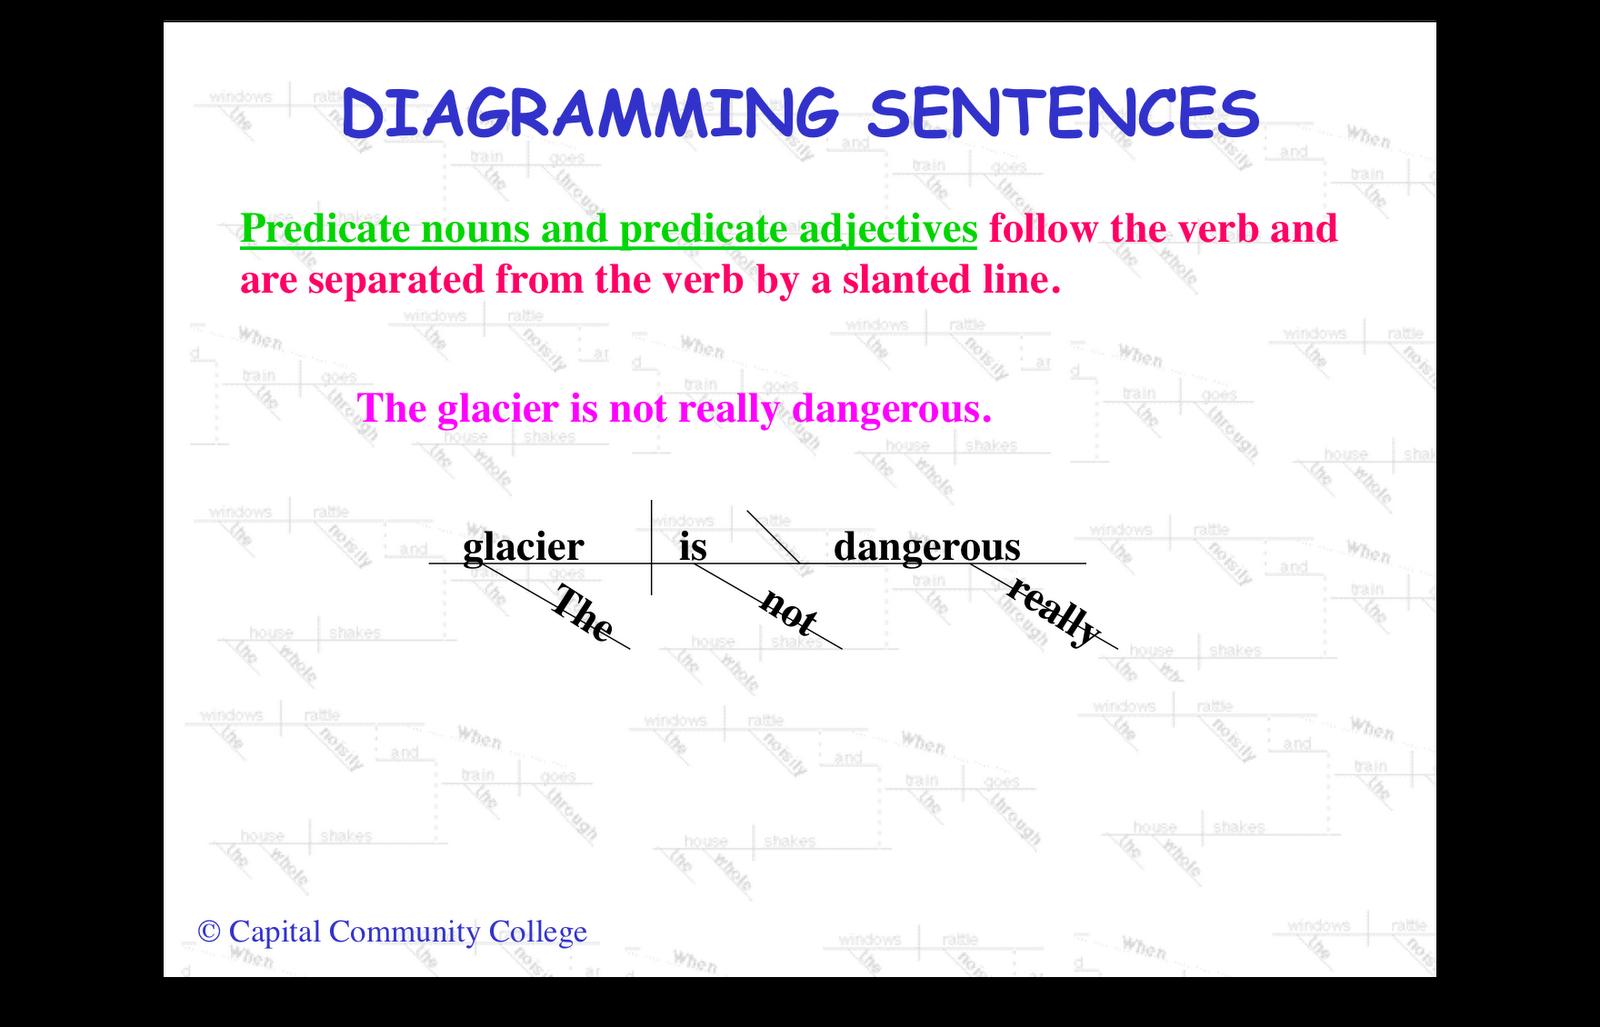 diagramming-sentences-printable-english-grammar-diagram-charts